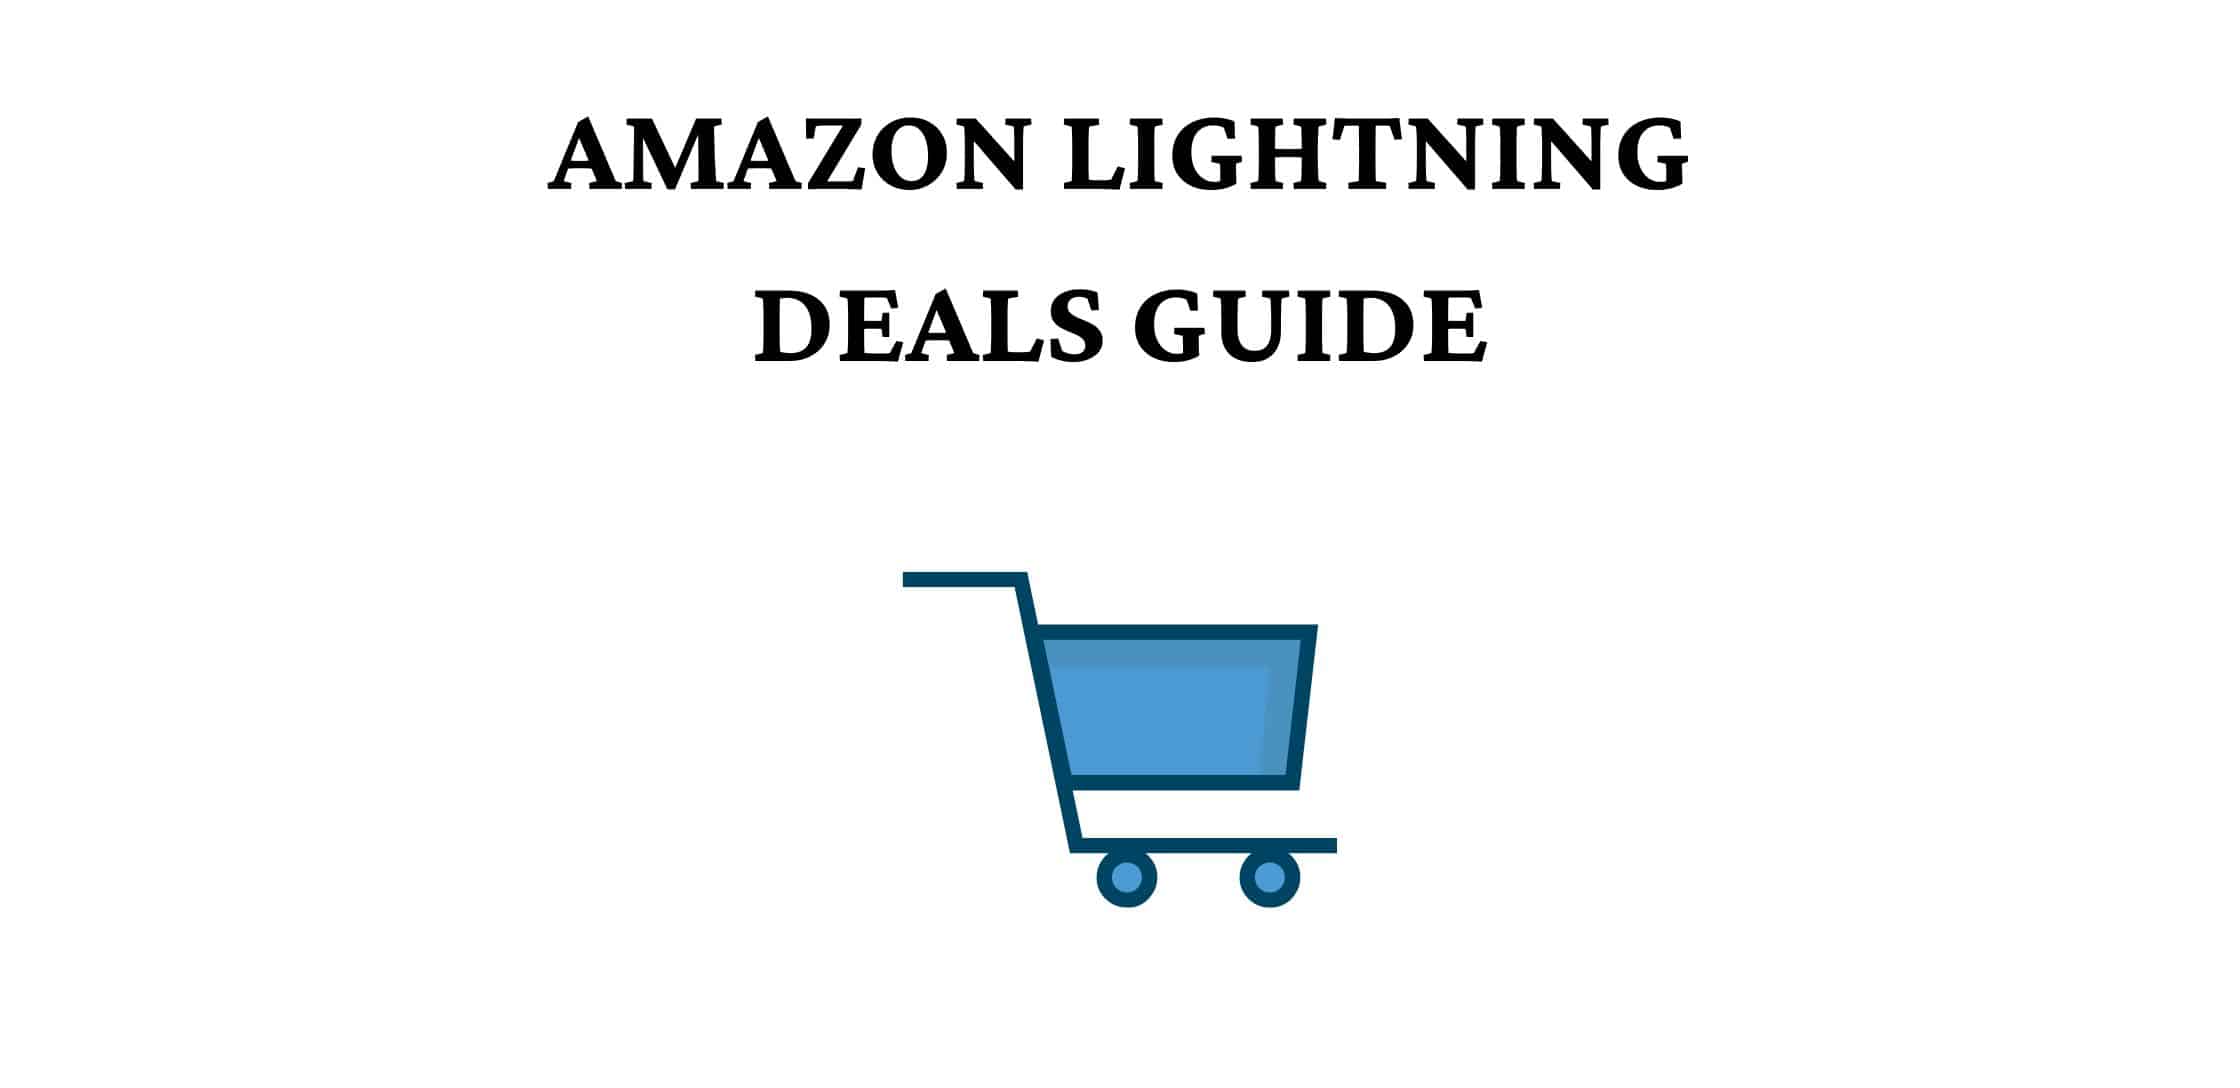 https://yofreesamples.com/wp-content/uploads/2022/04/Amazon-Lightning-Deals-Guide.jpg